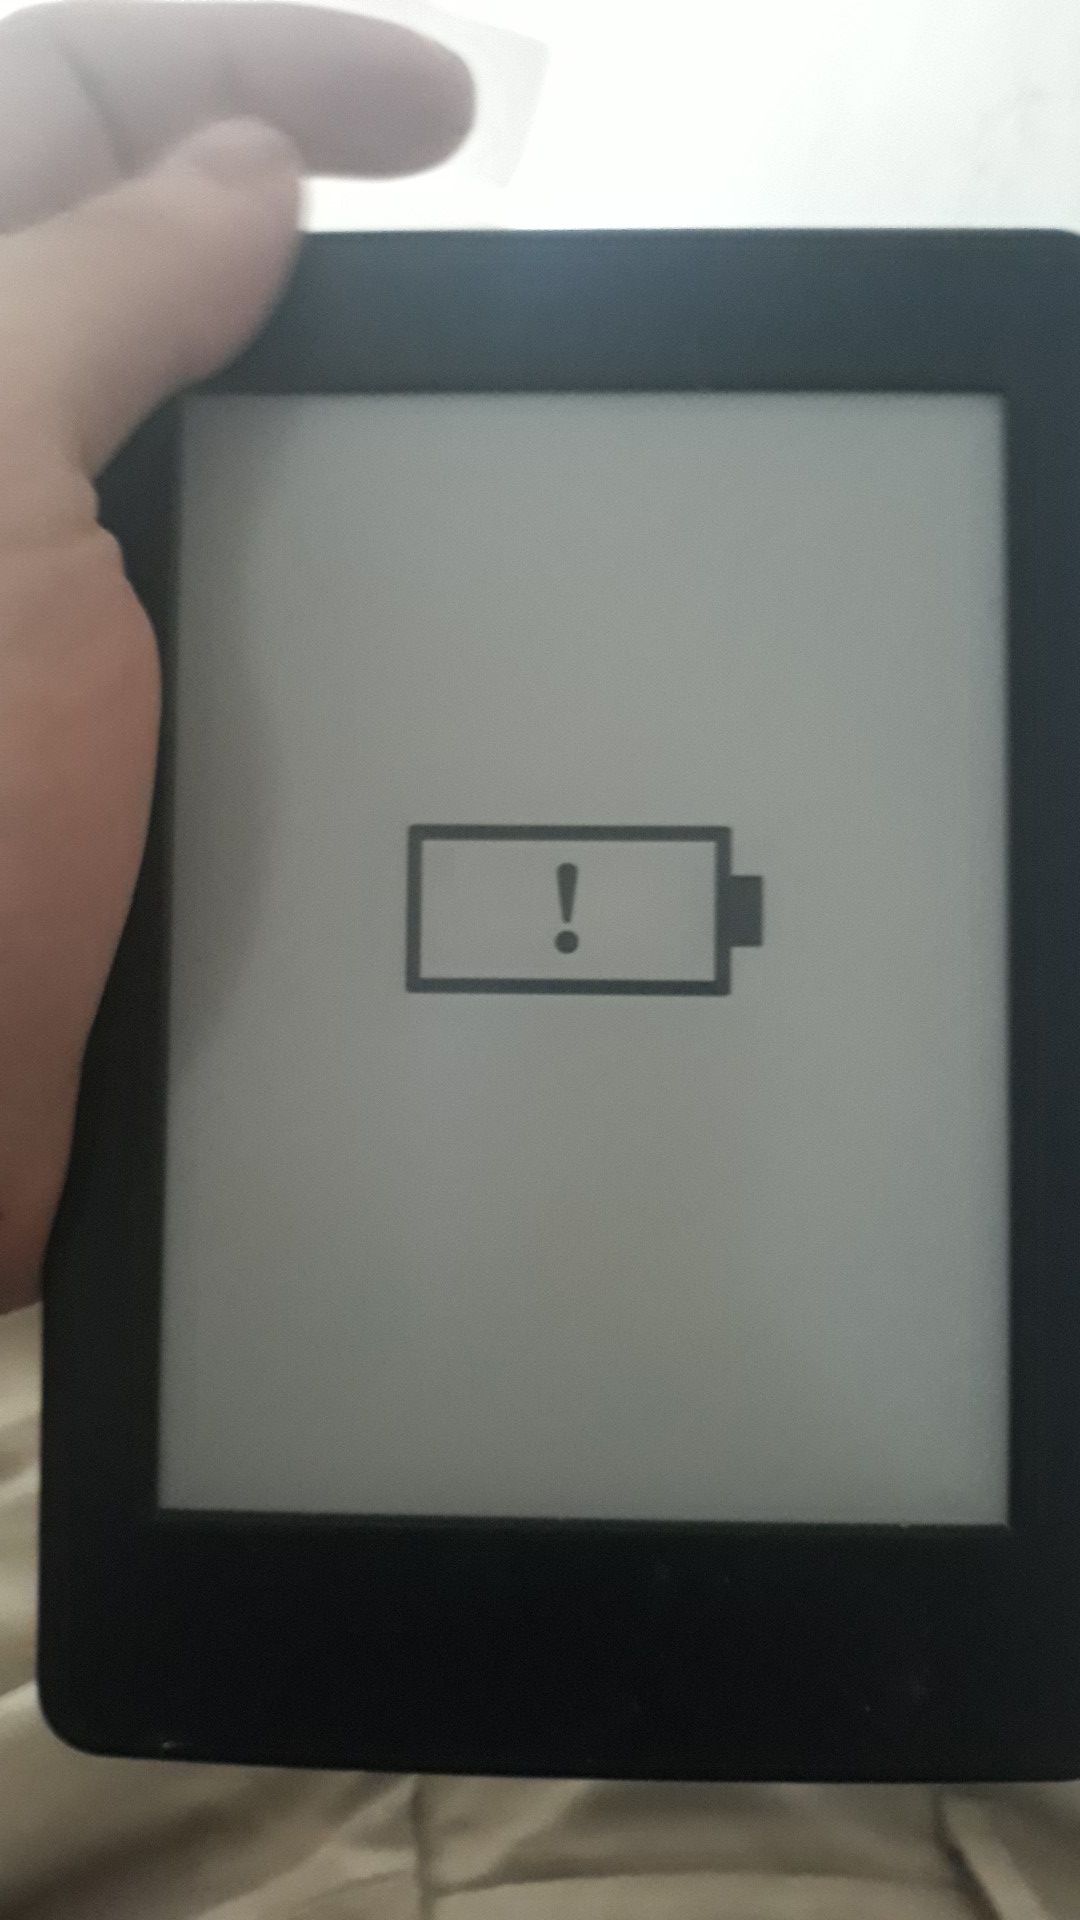 Kindle white 40$ obo